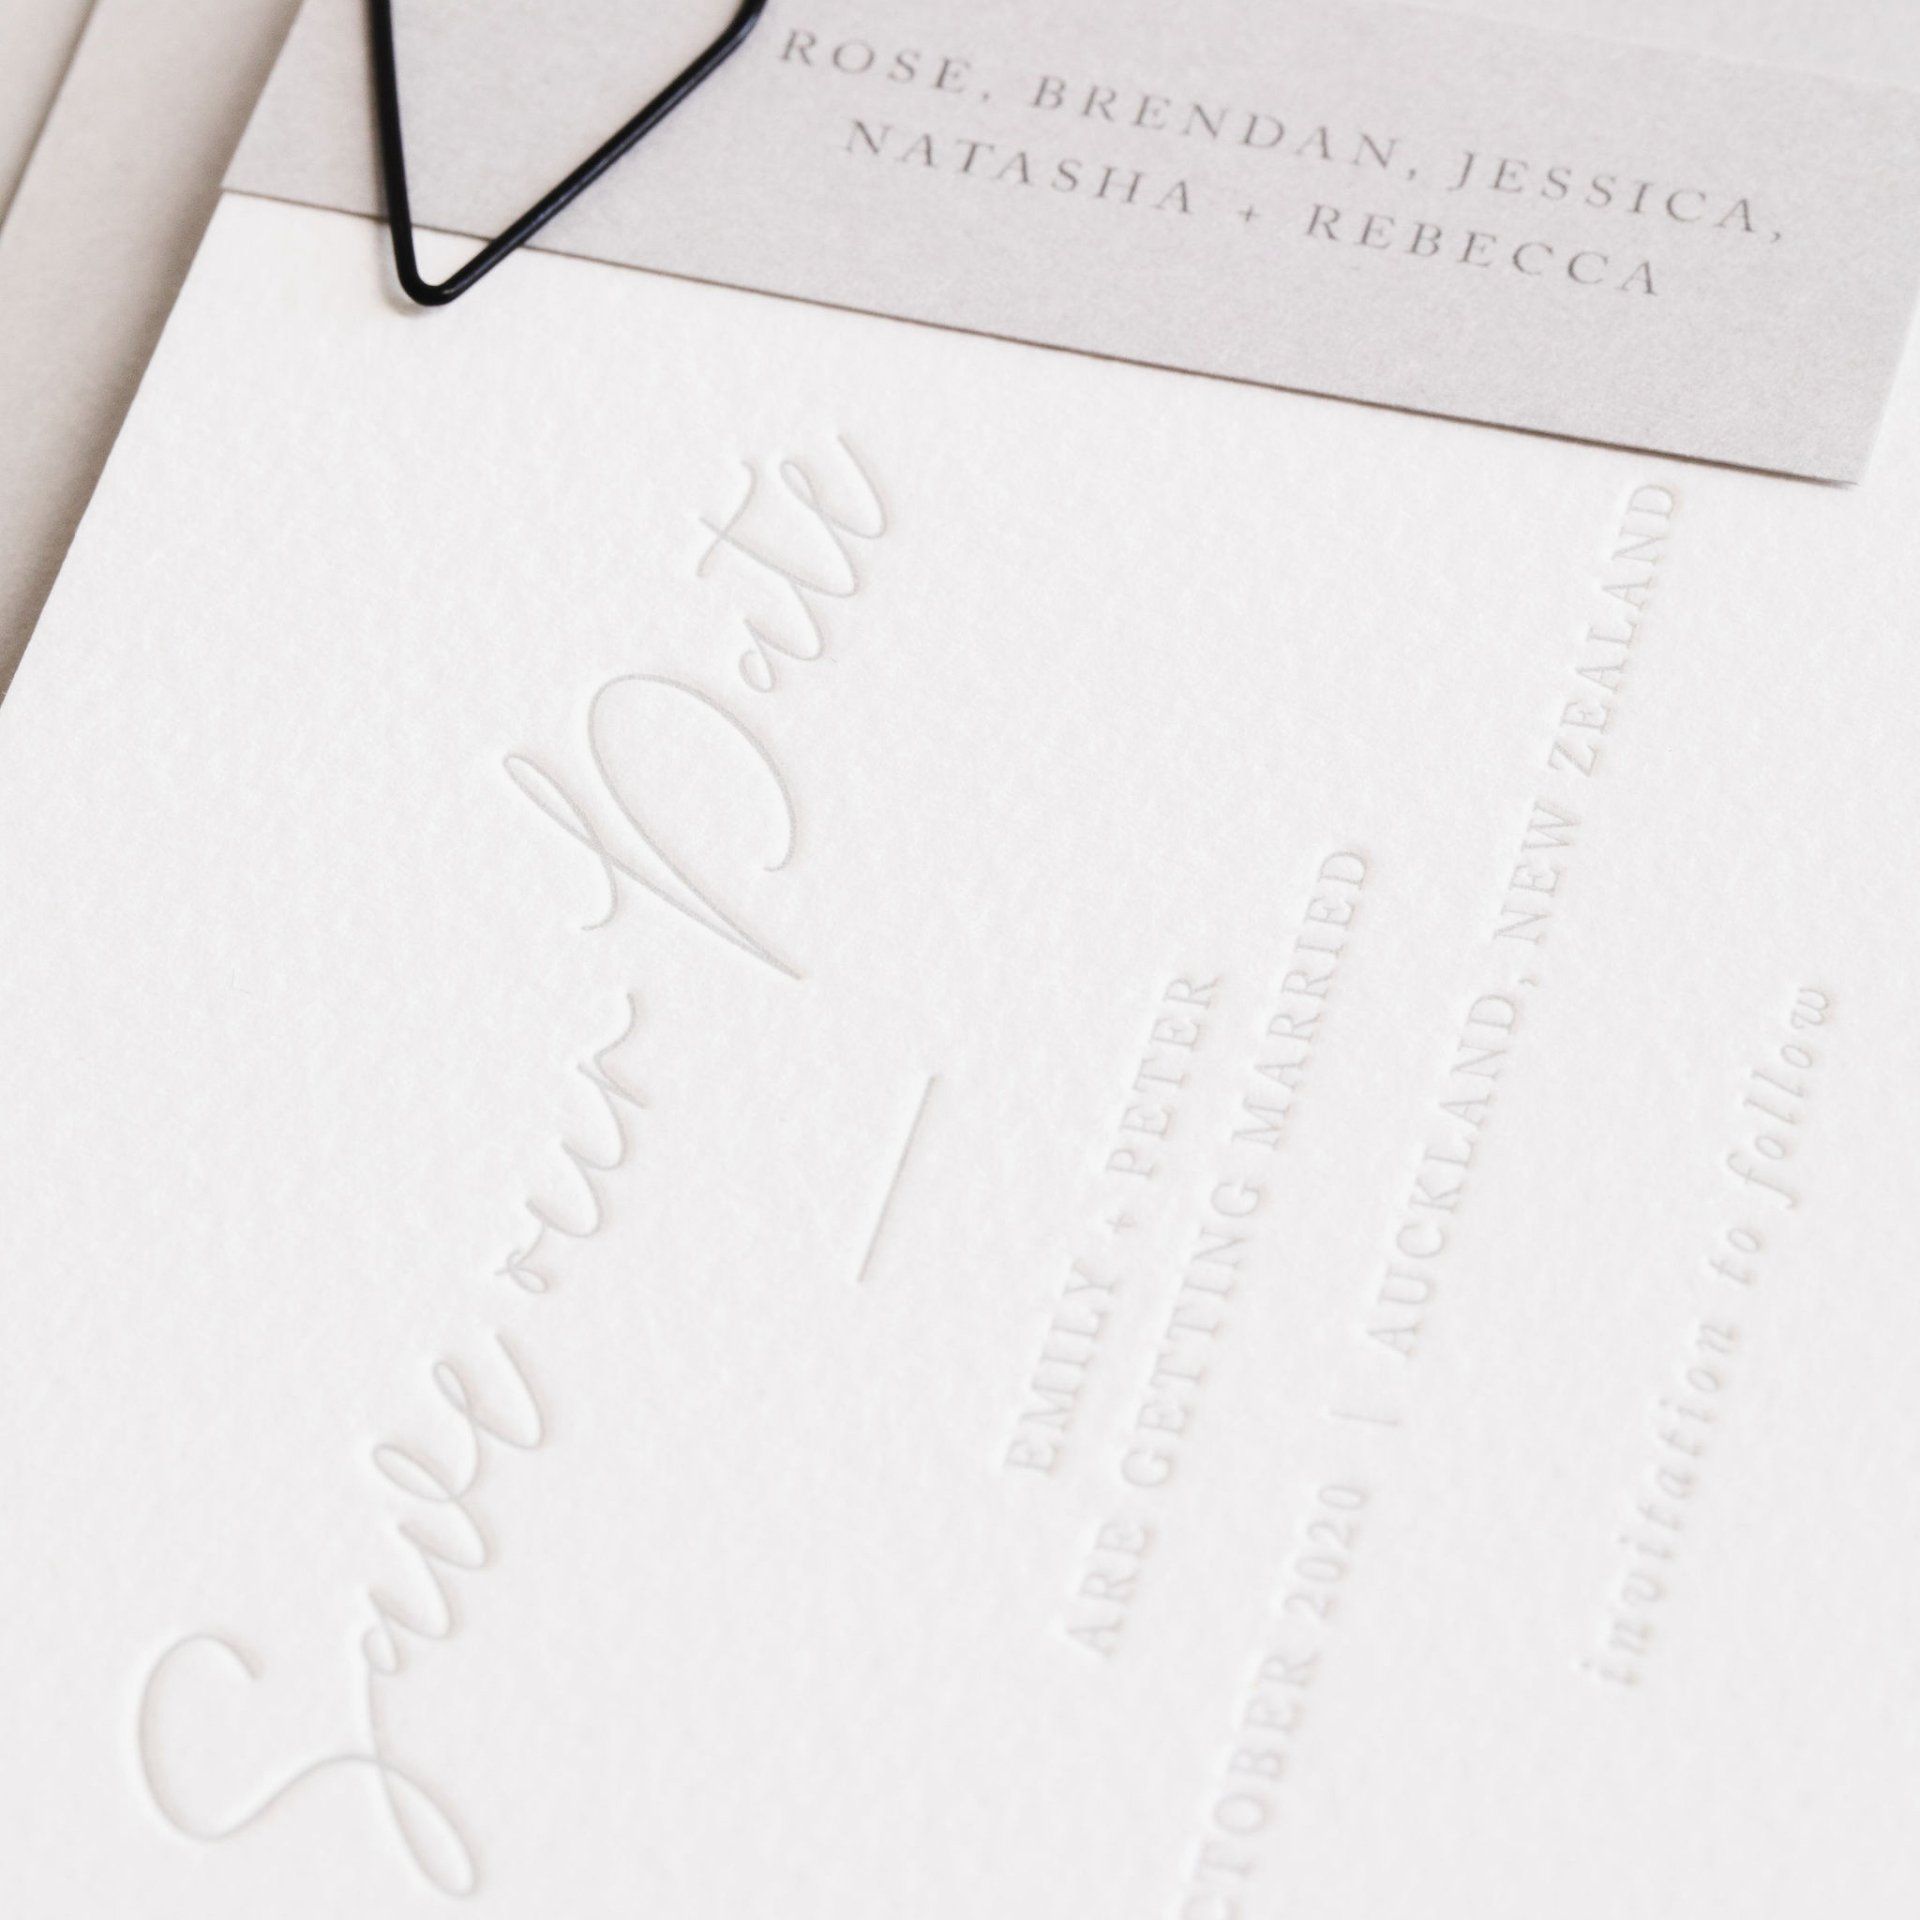 Save the date wedding invitations designed by Vanilla Hayes creative graphic design  studio in Blenheim, Marlborough, New Zealand